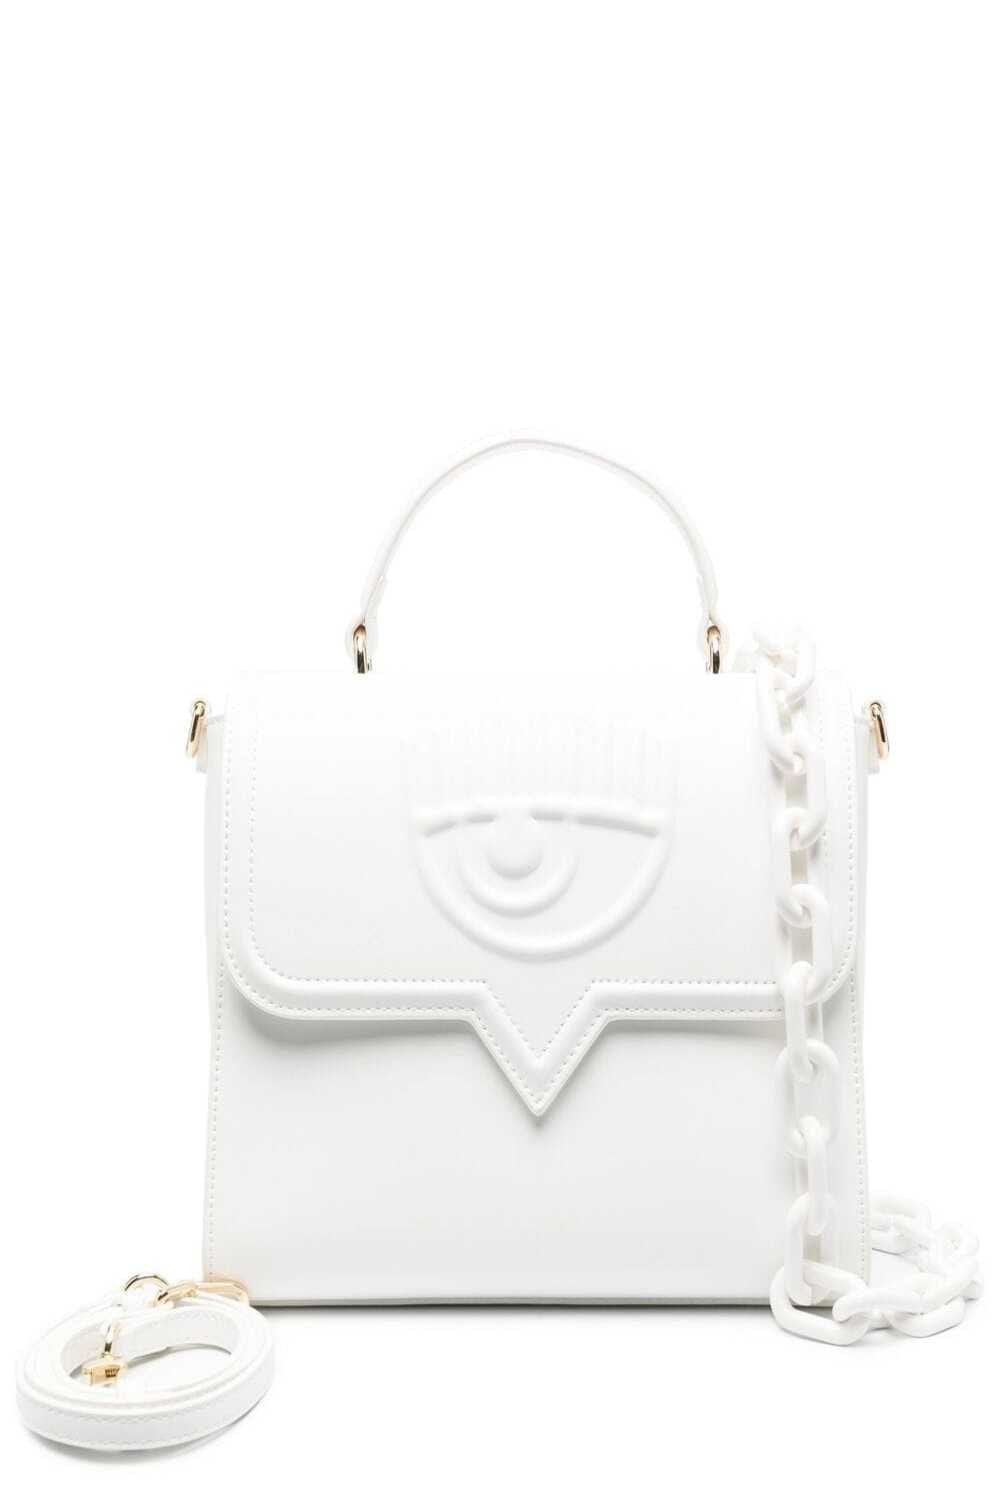 Chiara Ferragni Bags & Handbags outlet - Women - 1800 products on